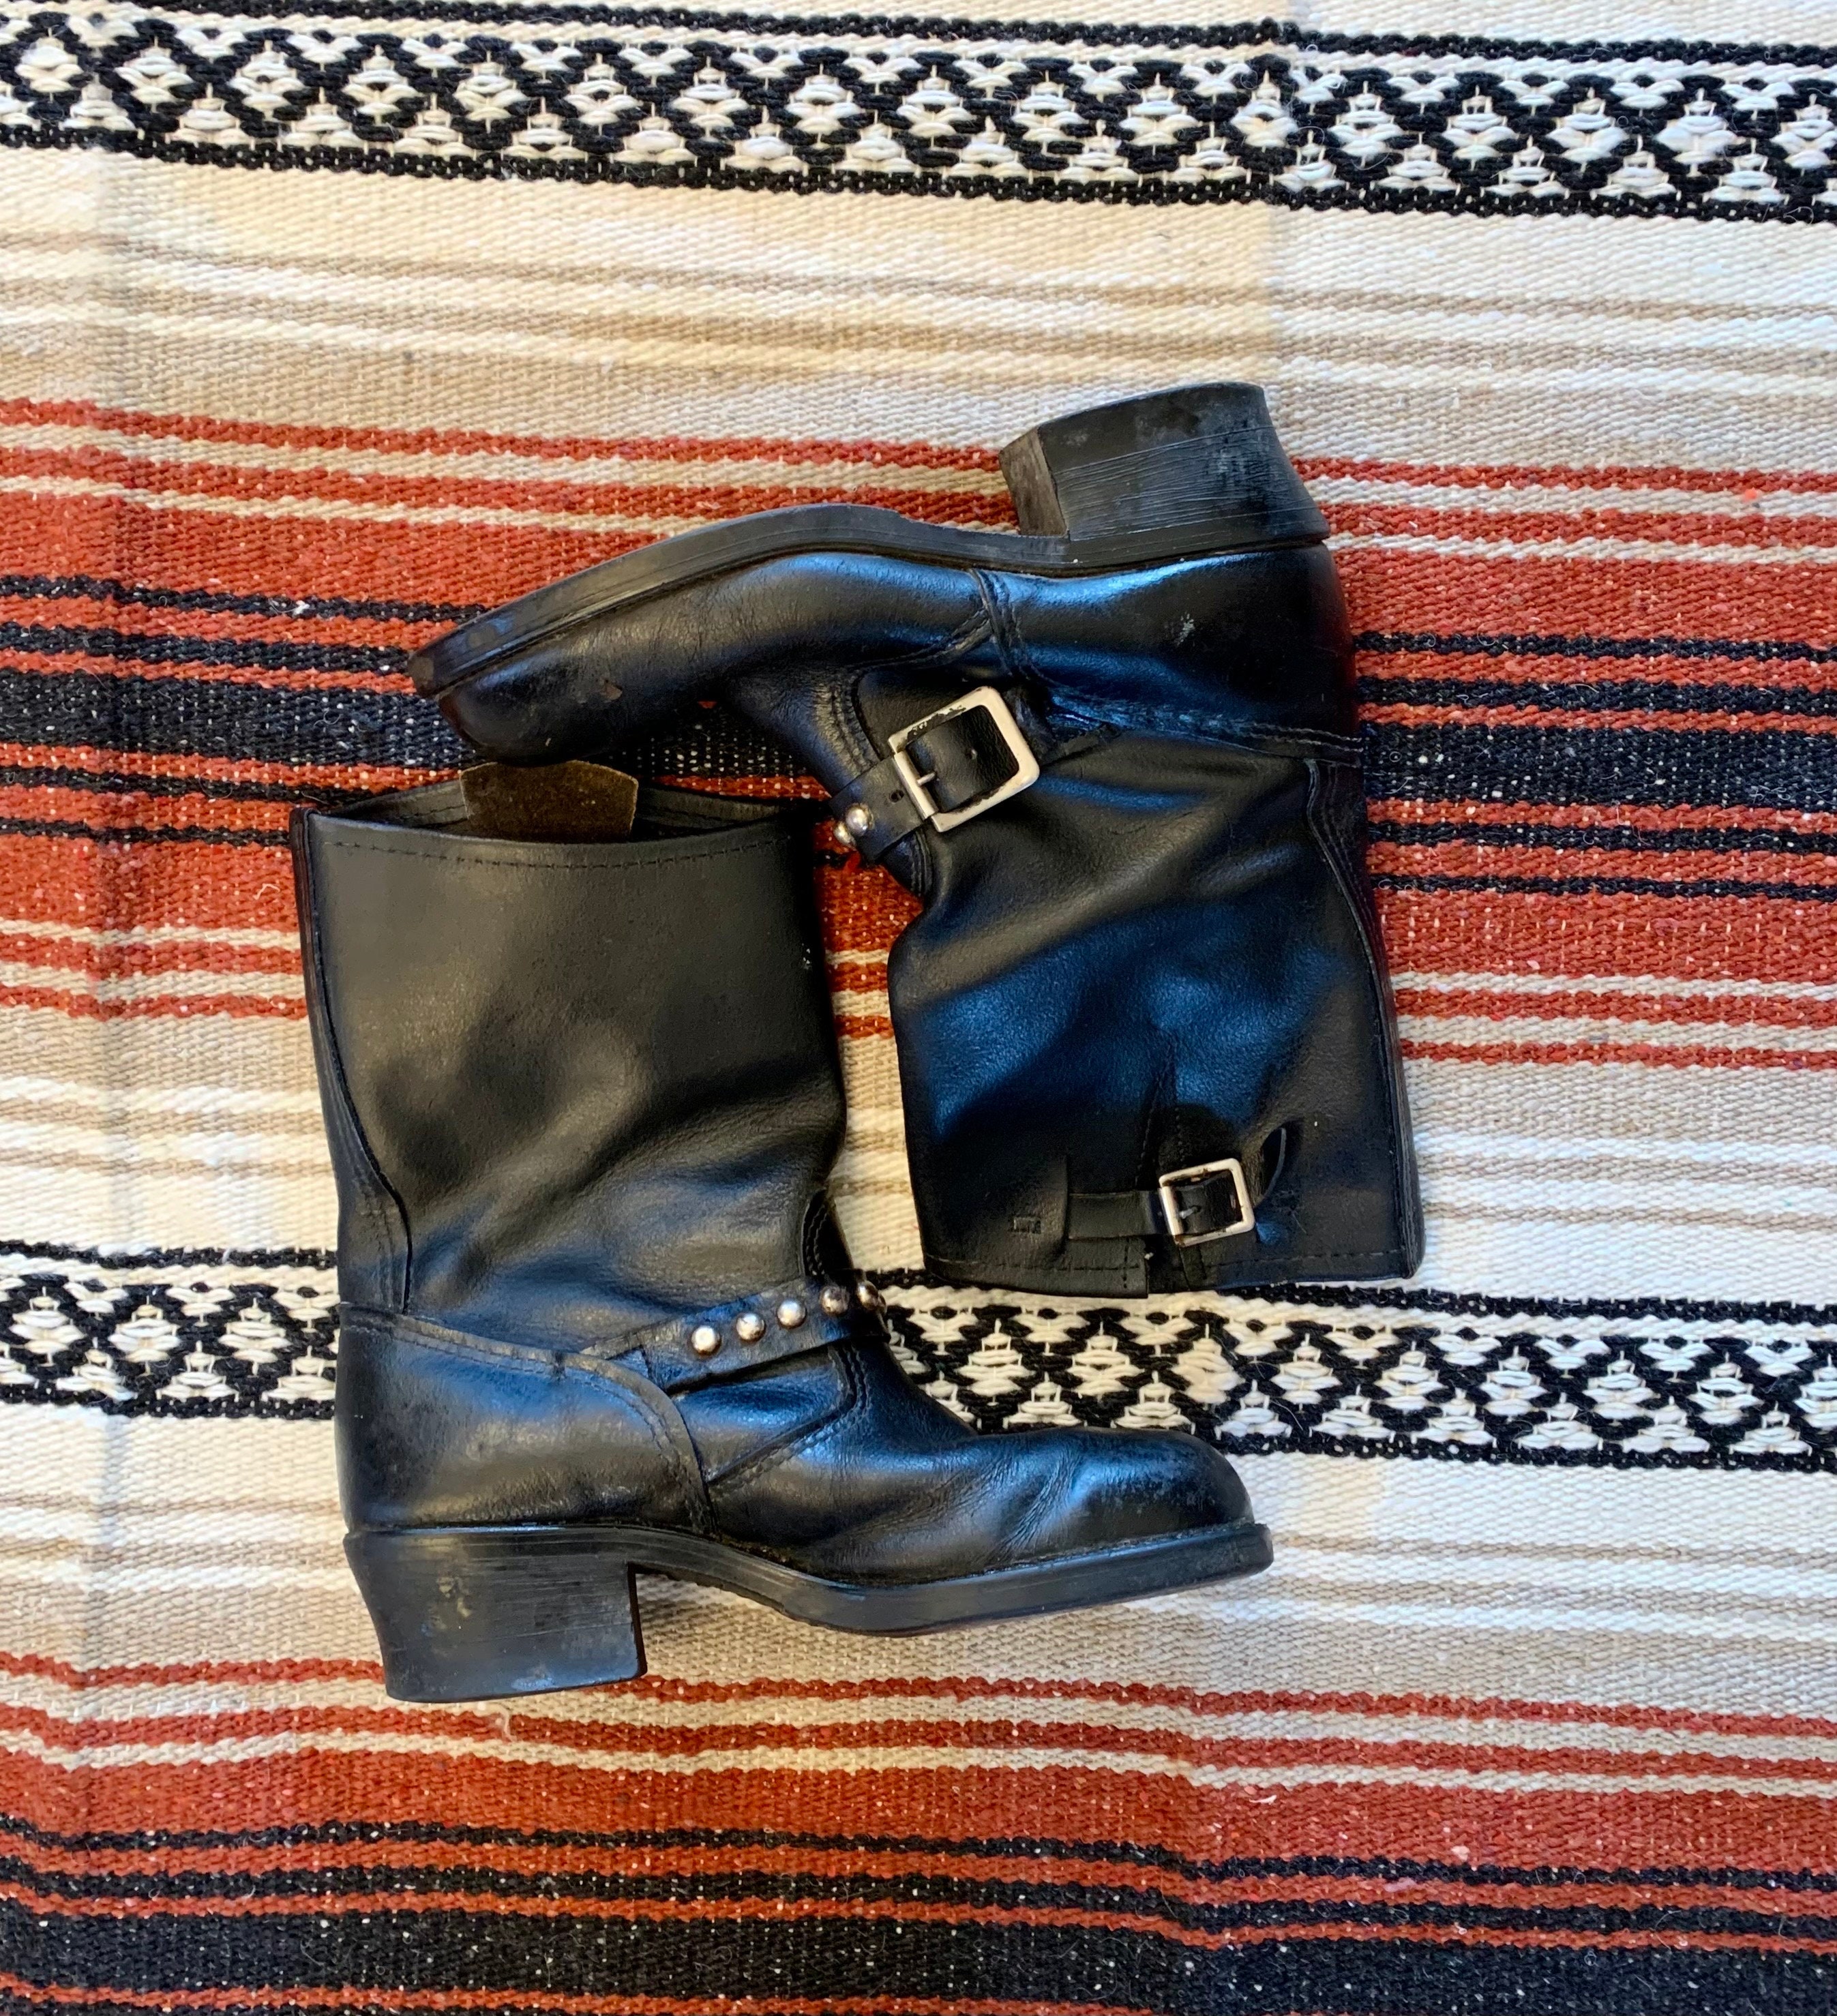 Chanel Black Leather CC Adventure Boots, 37.5